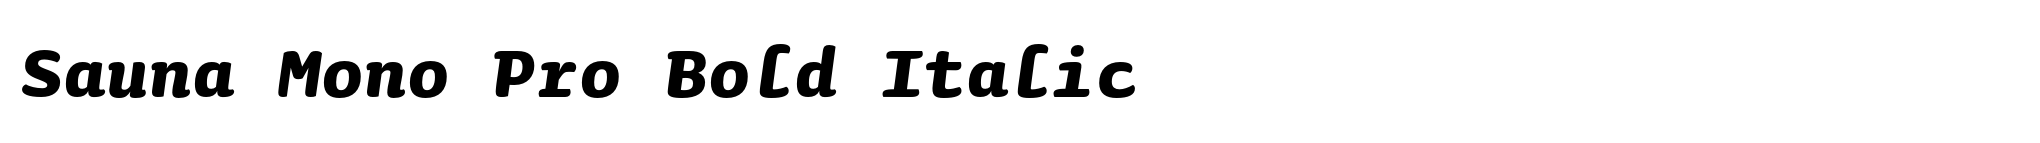 Sauna Mono Pro Bold Italic image